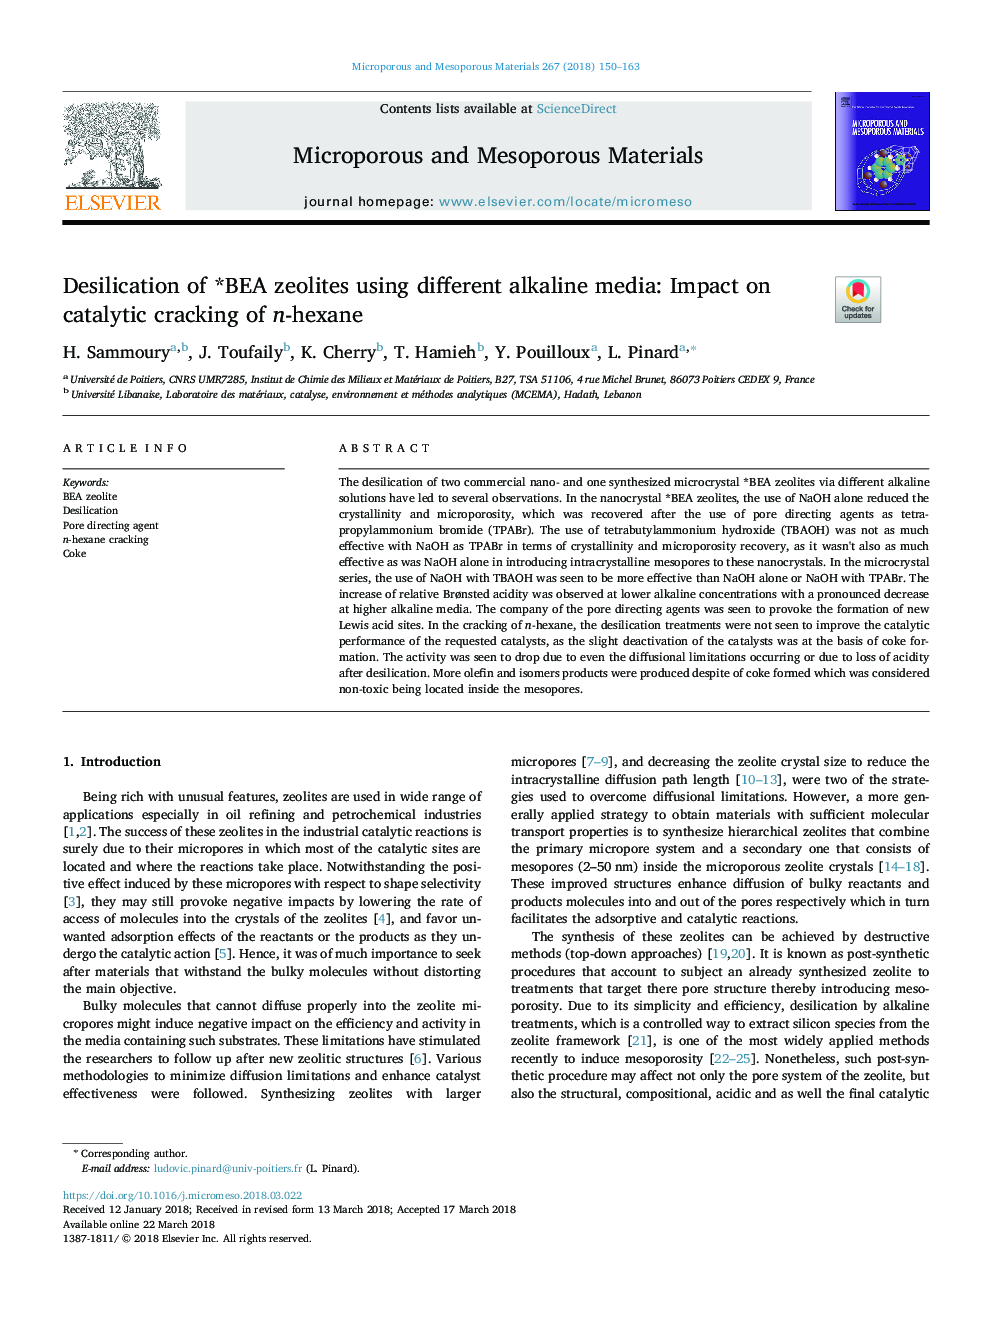 Desilication of *BEA zeolites using different alkaline media: Impact on catalytic cracking of n-hexane